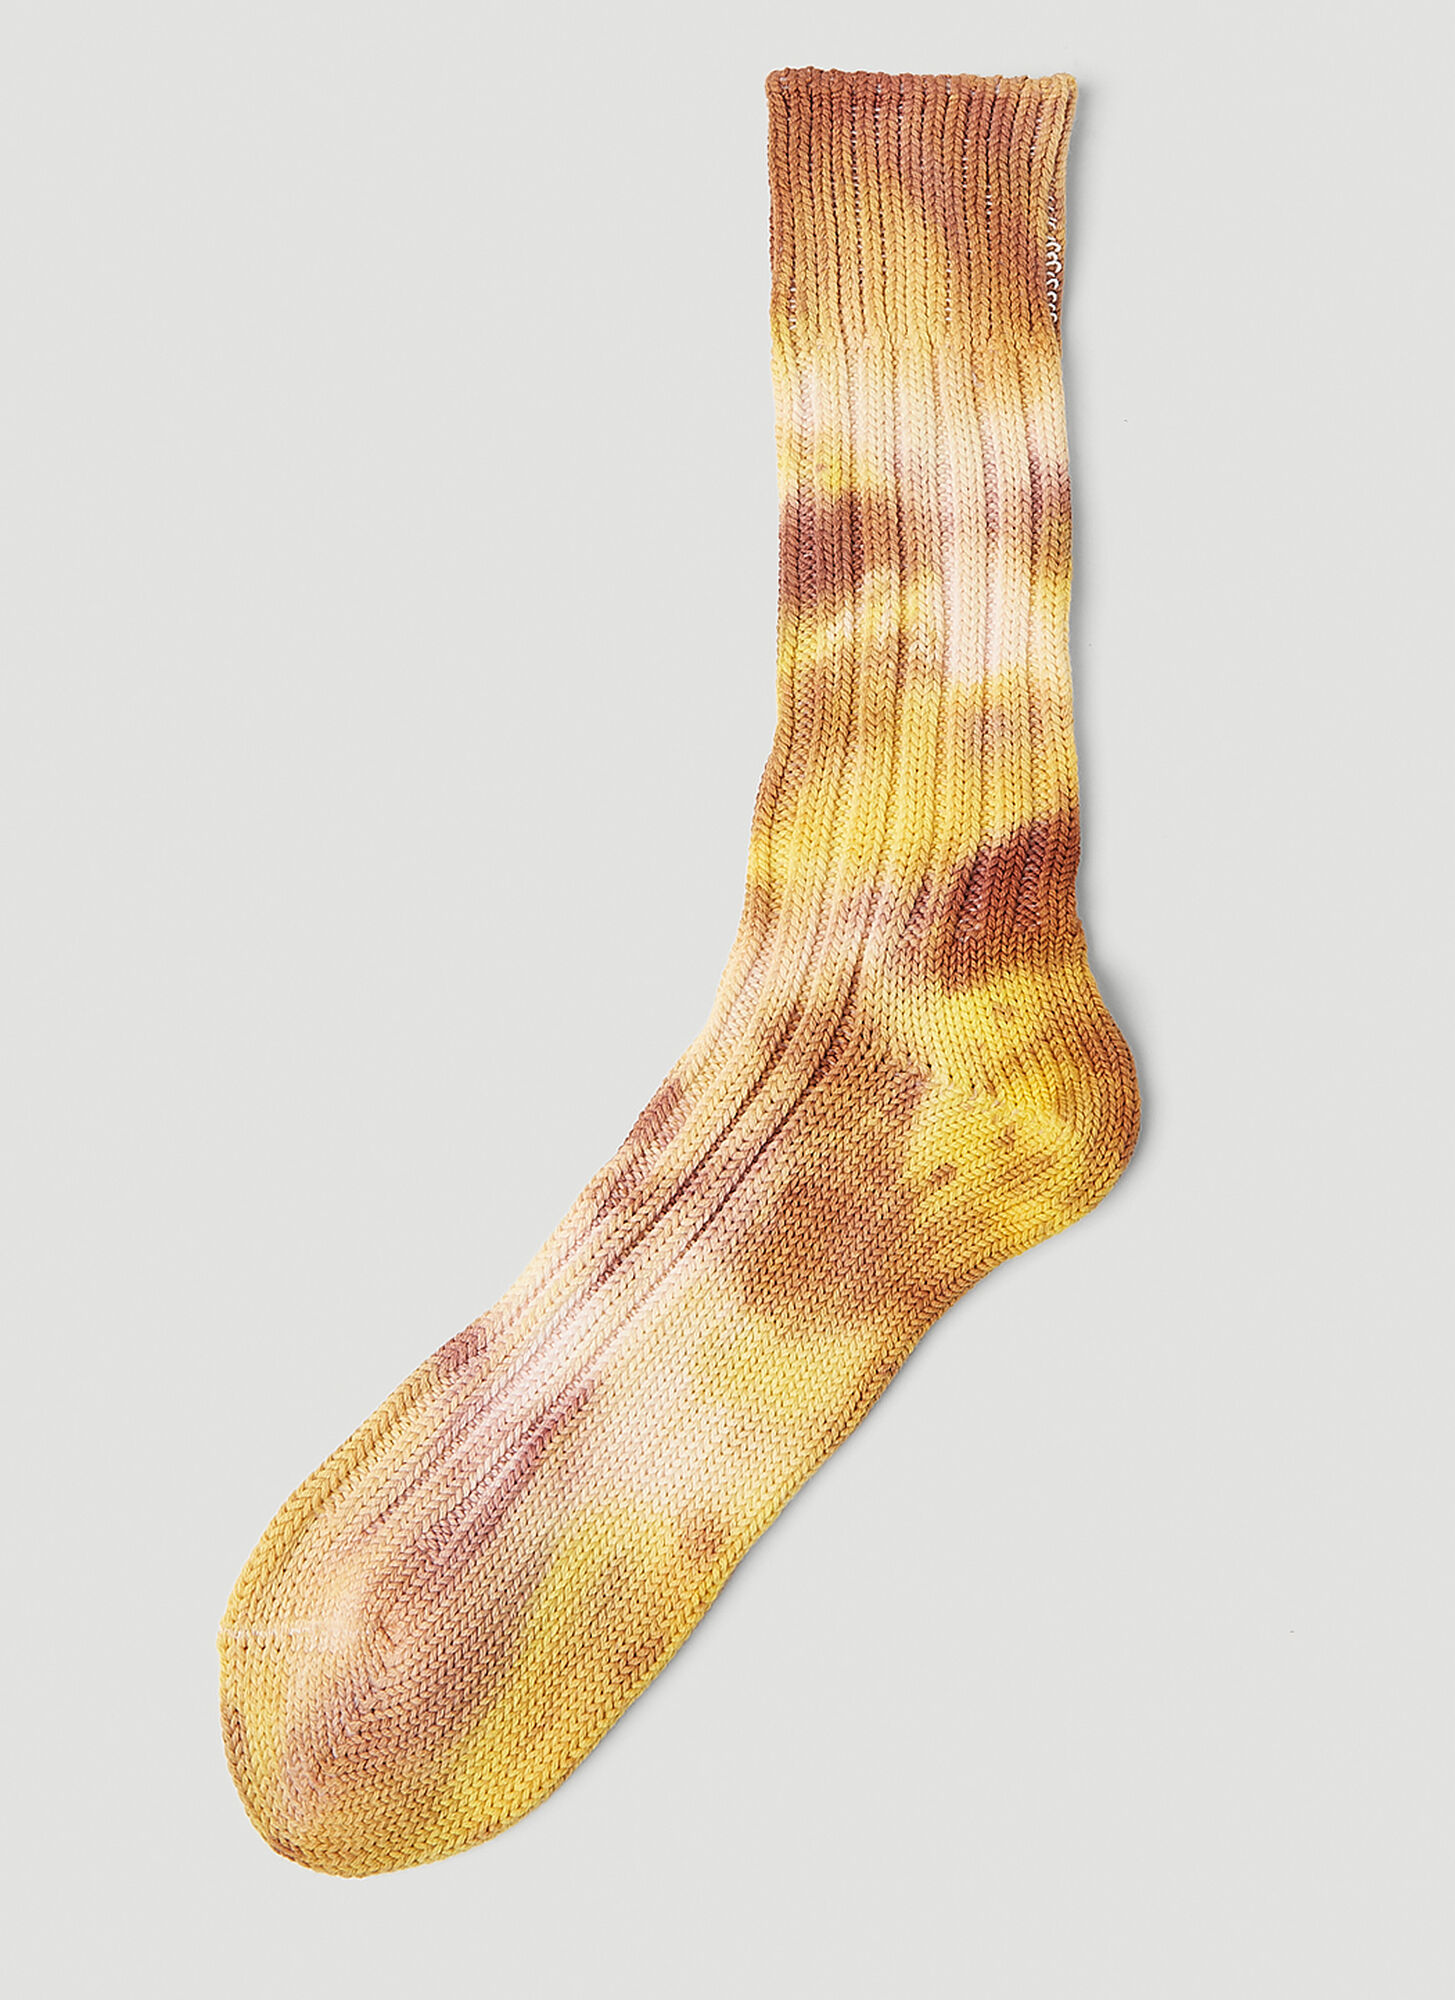 Stain Shade X Decka Socks Tie Dye Socks In Yellow